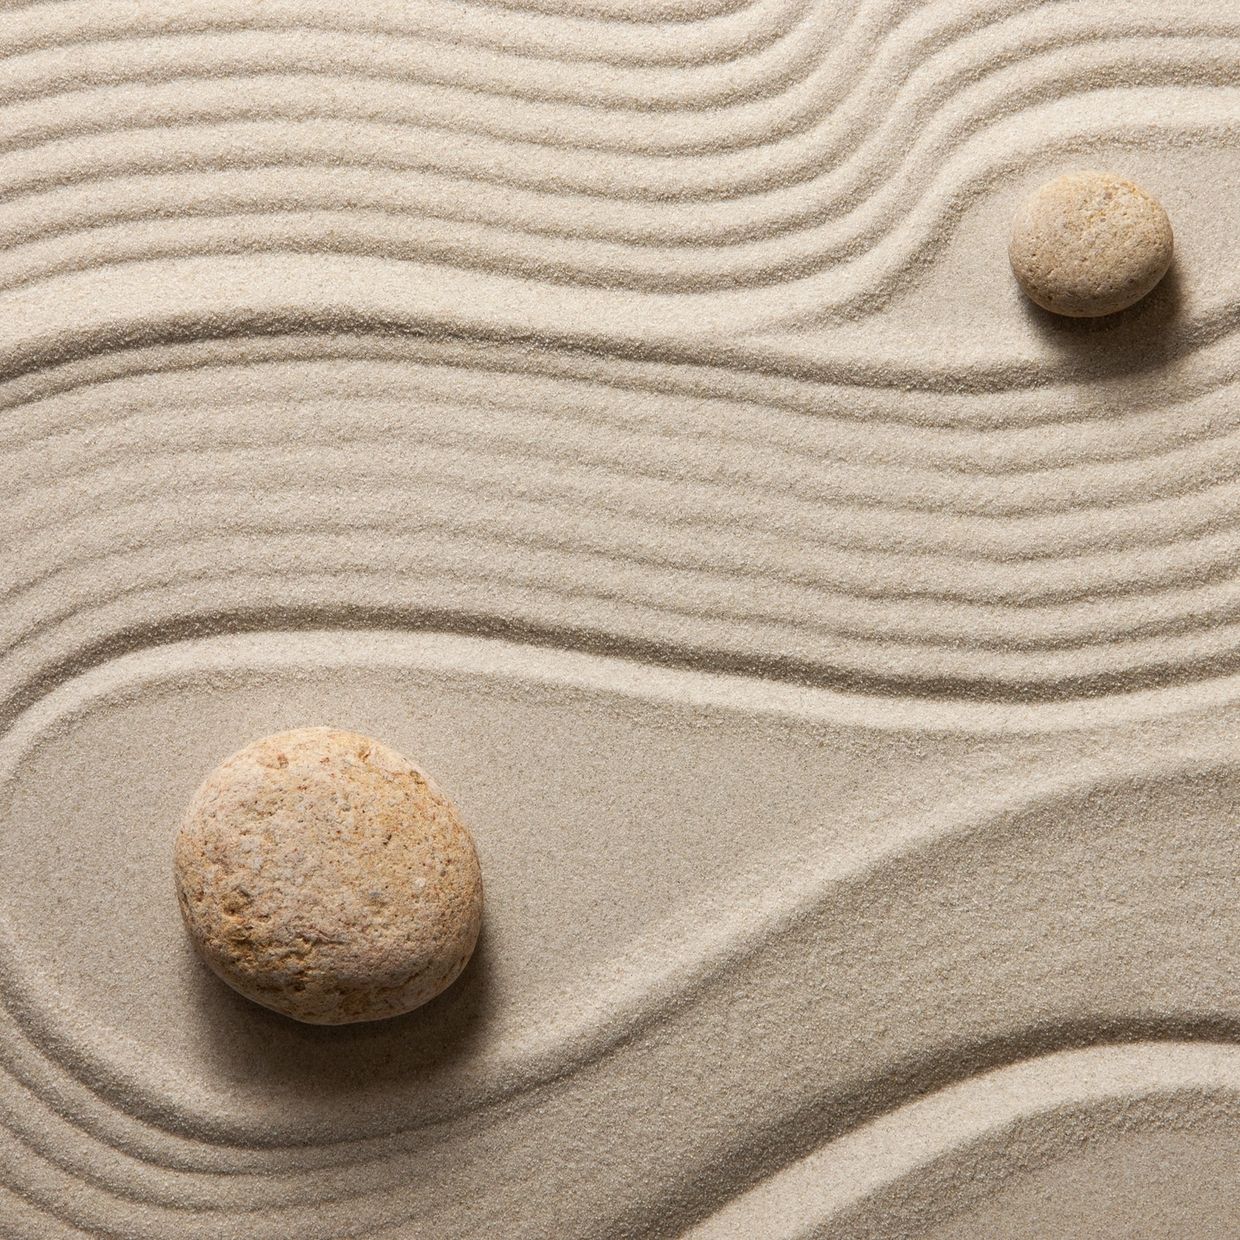 Zen sand maze with rocks for calming the spirit